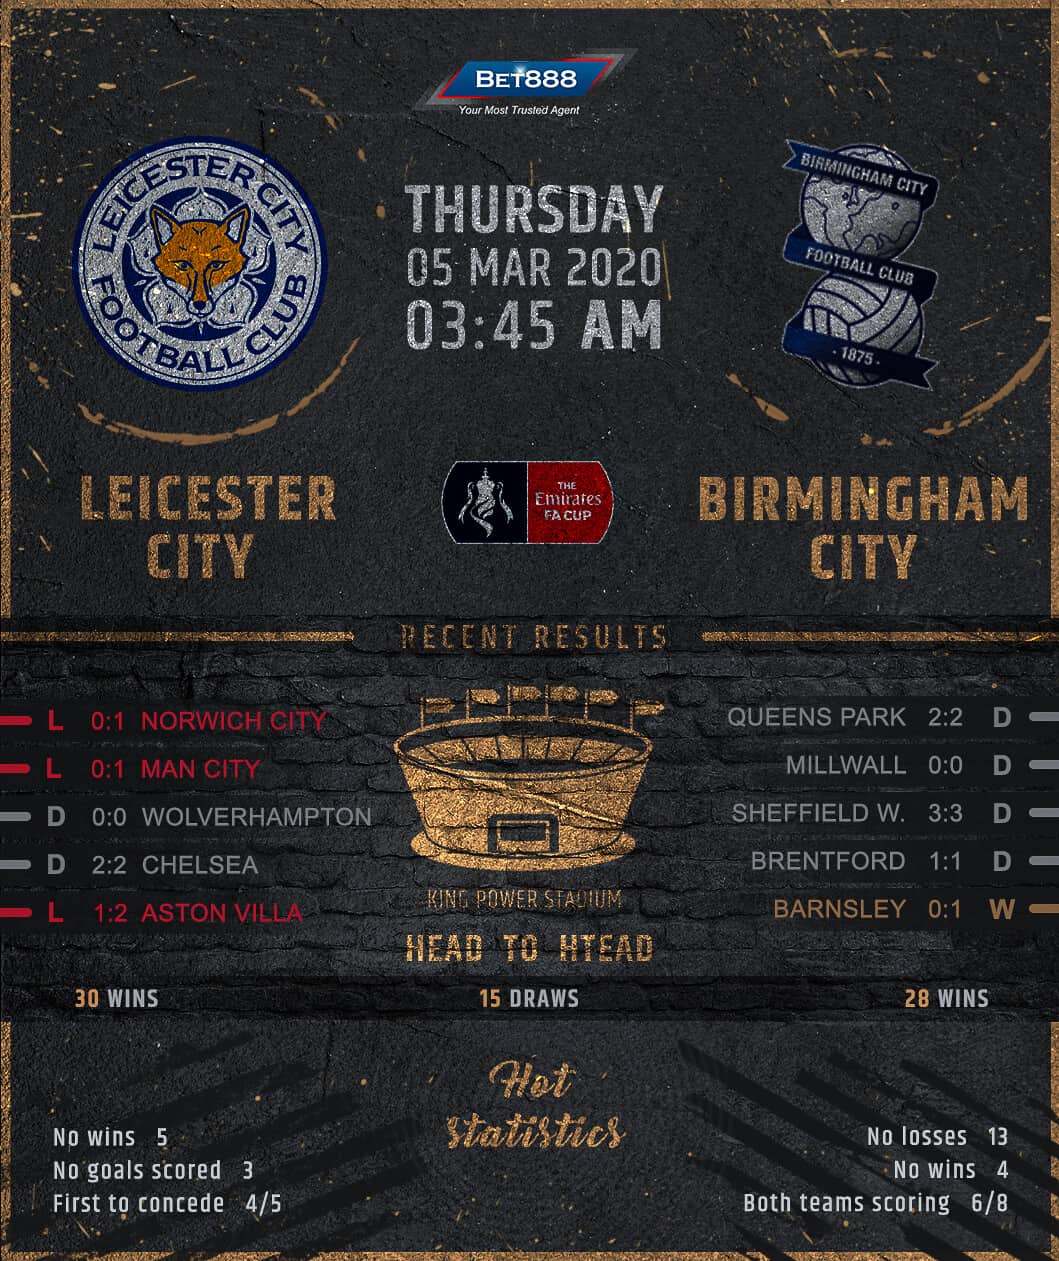 Leicester City vs Birmingham City 05/03/20